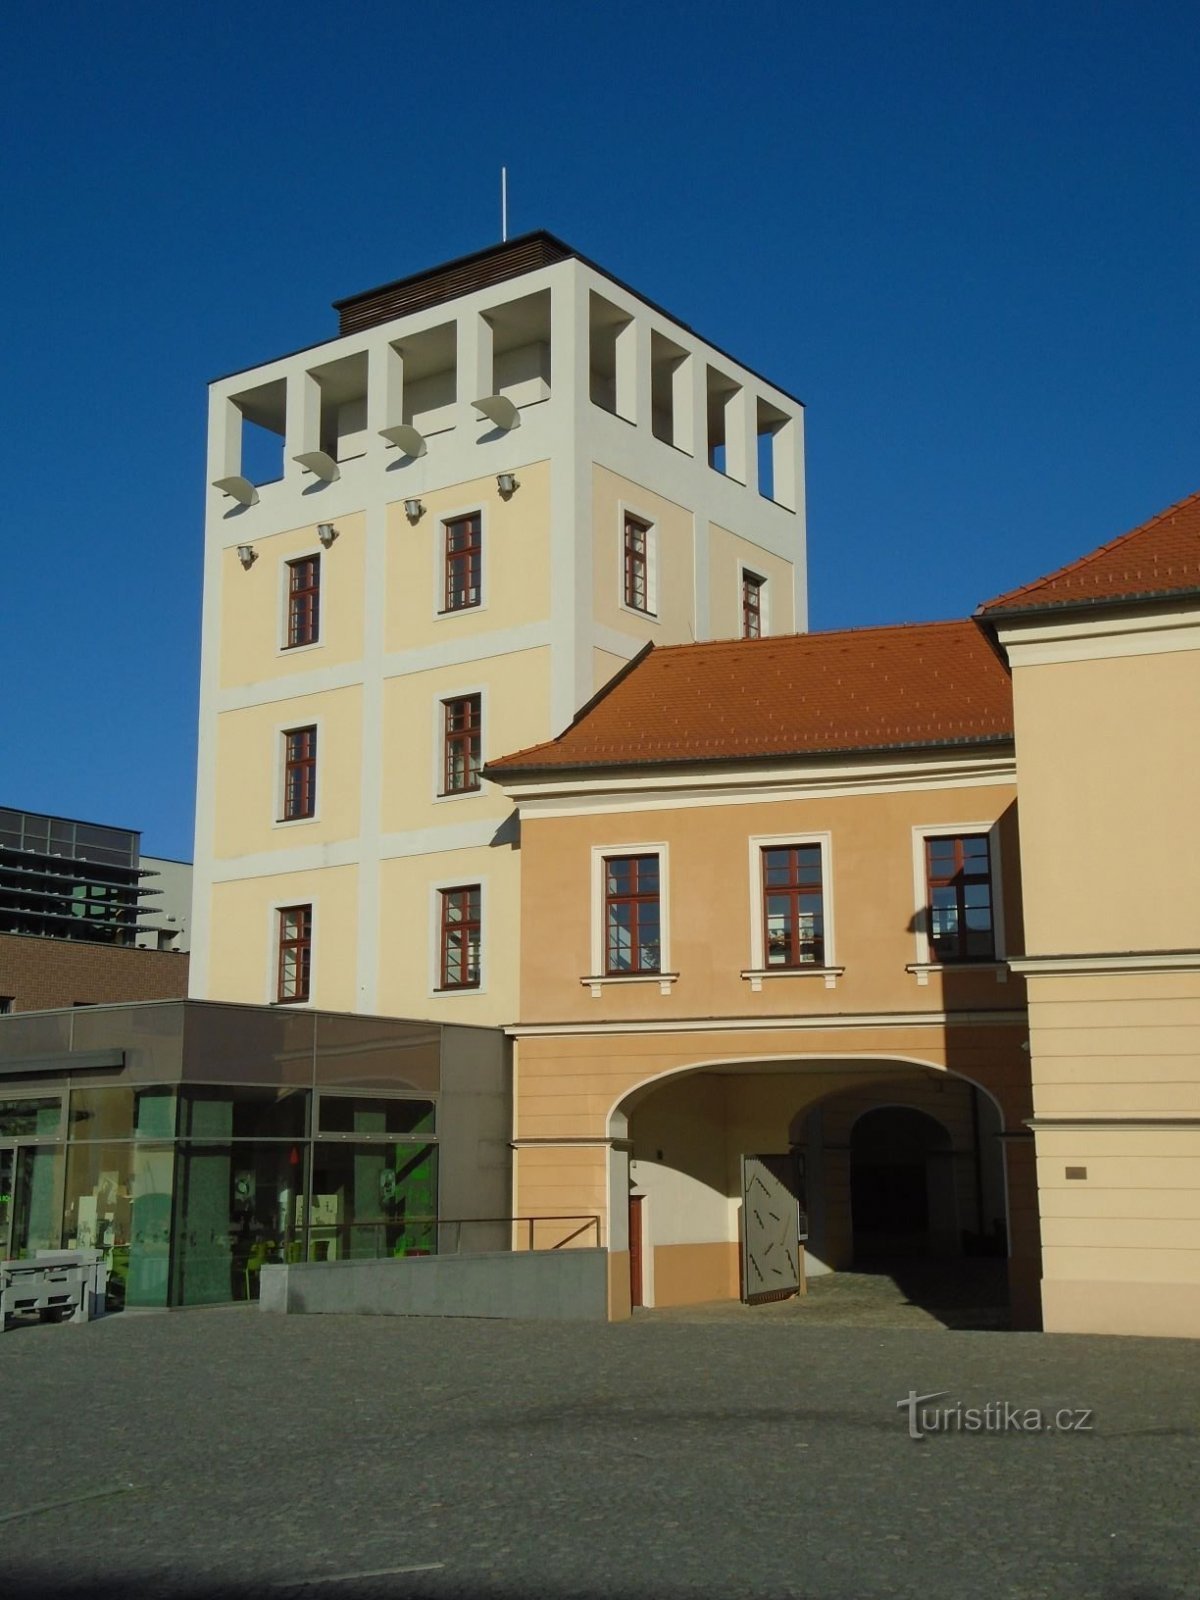 Der ehemalige Wasserturm Kozinka (Hradec Králové, 17.11.2018)